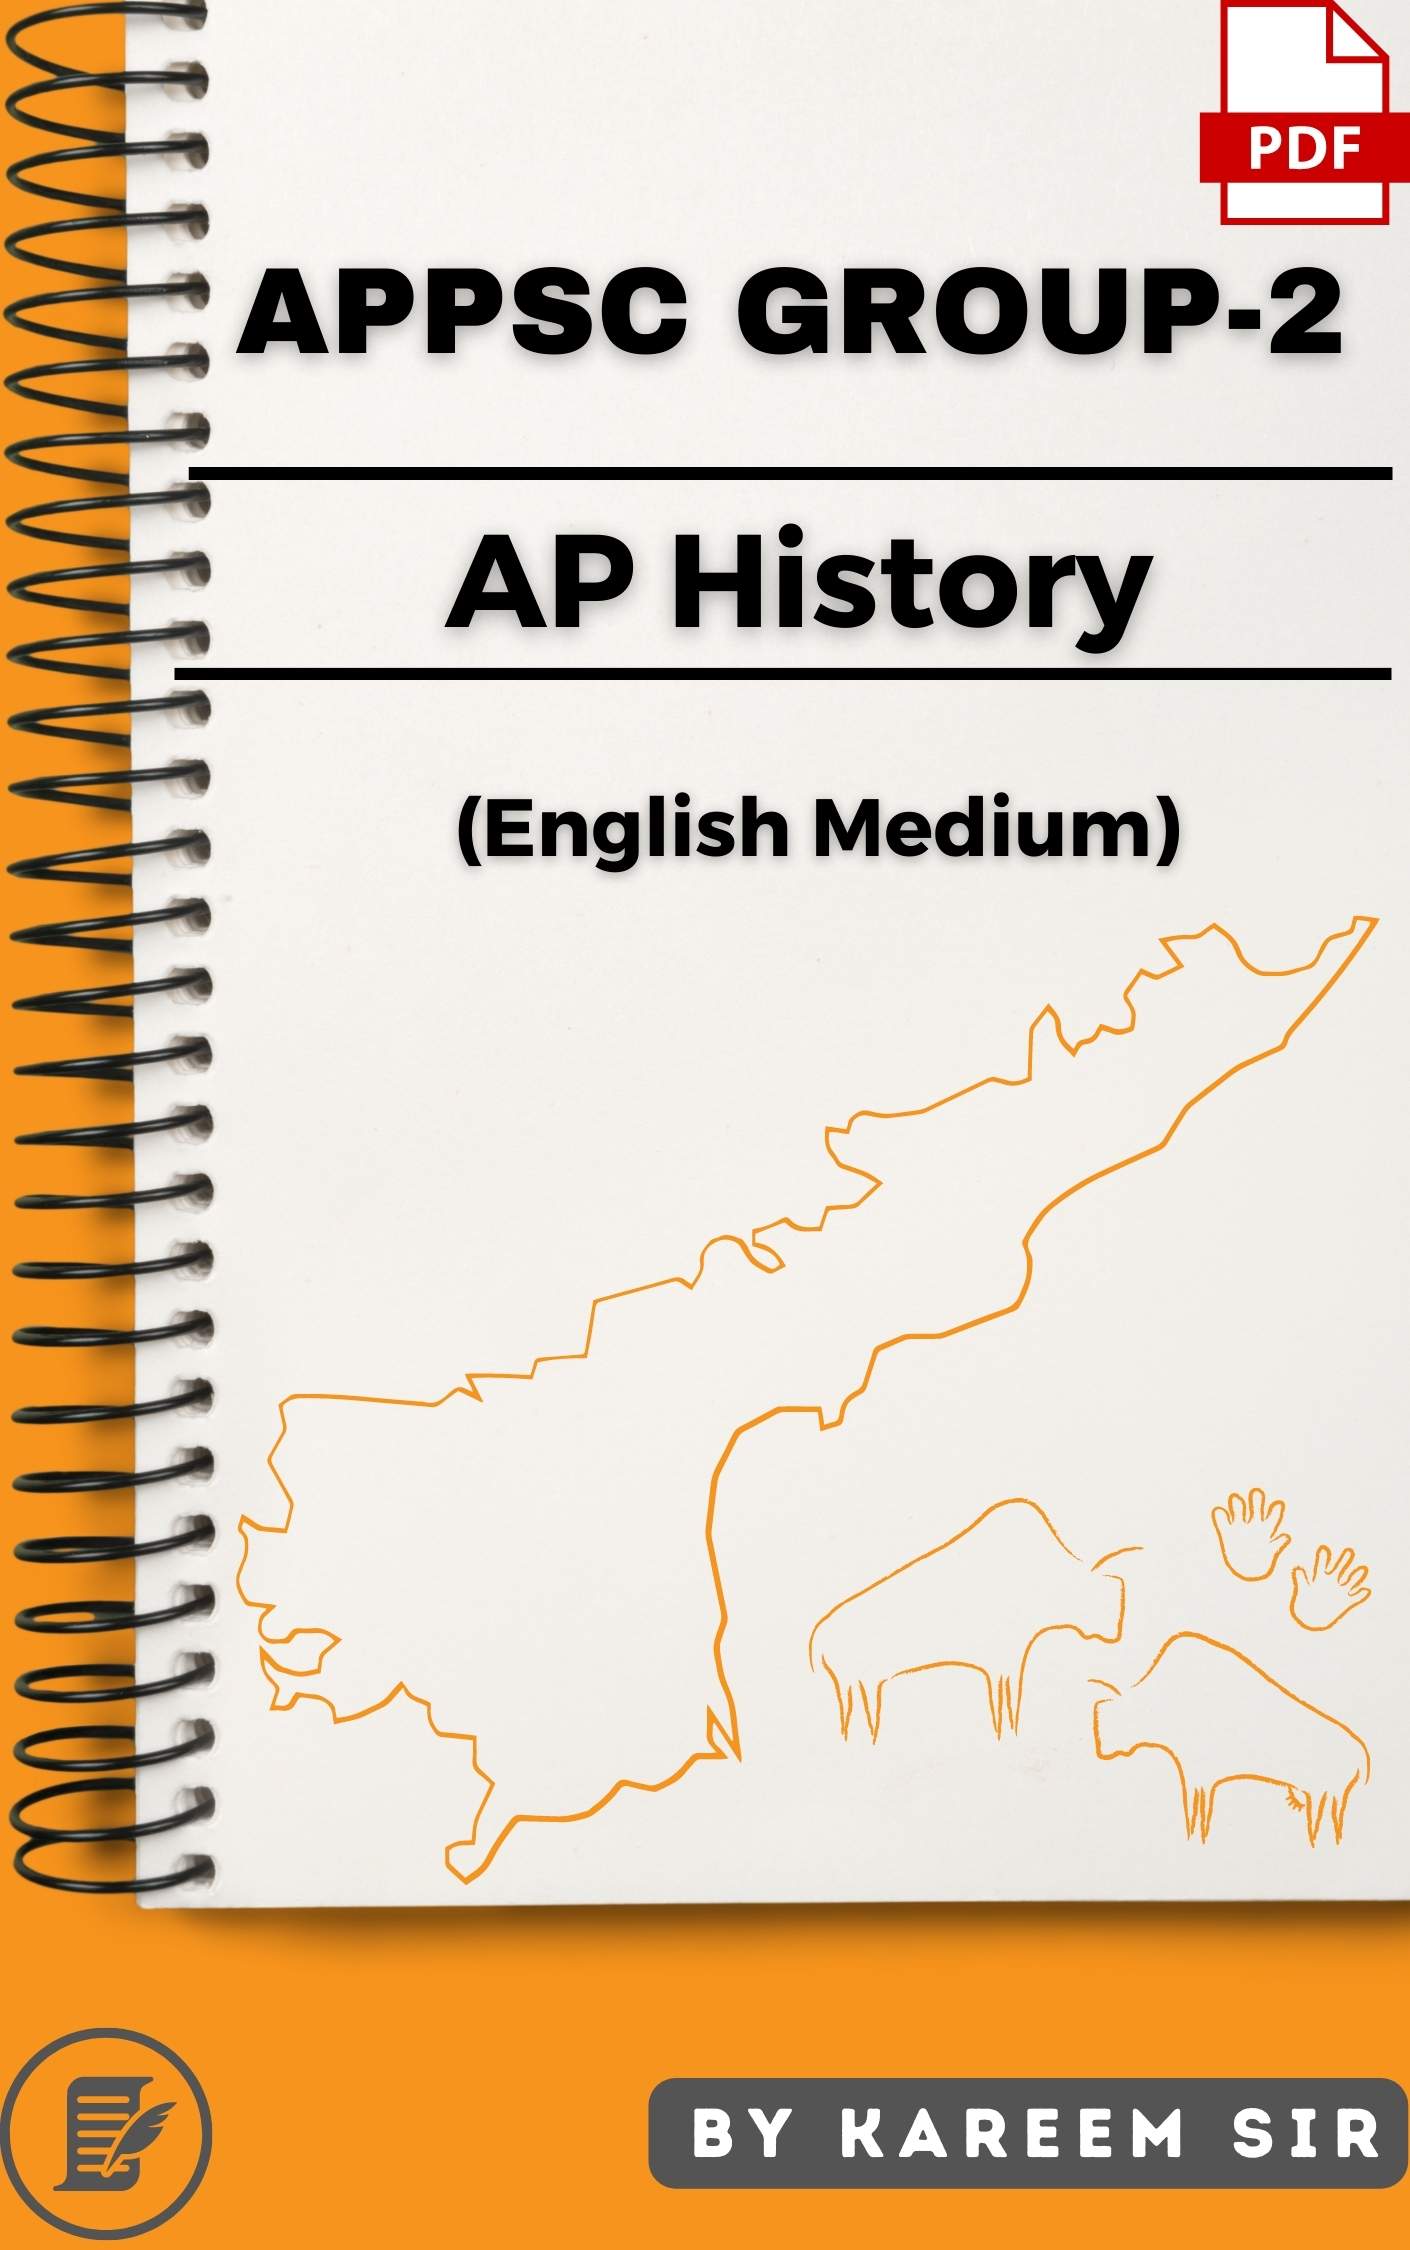 APPSC Group-2 Andhra Pradesh (AP) History by Kareem (Handwritten Class Notes)